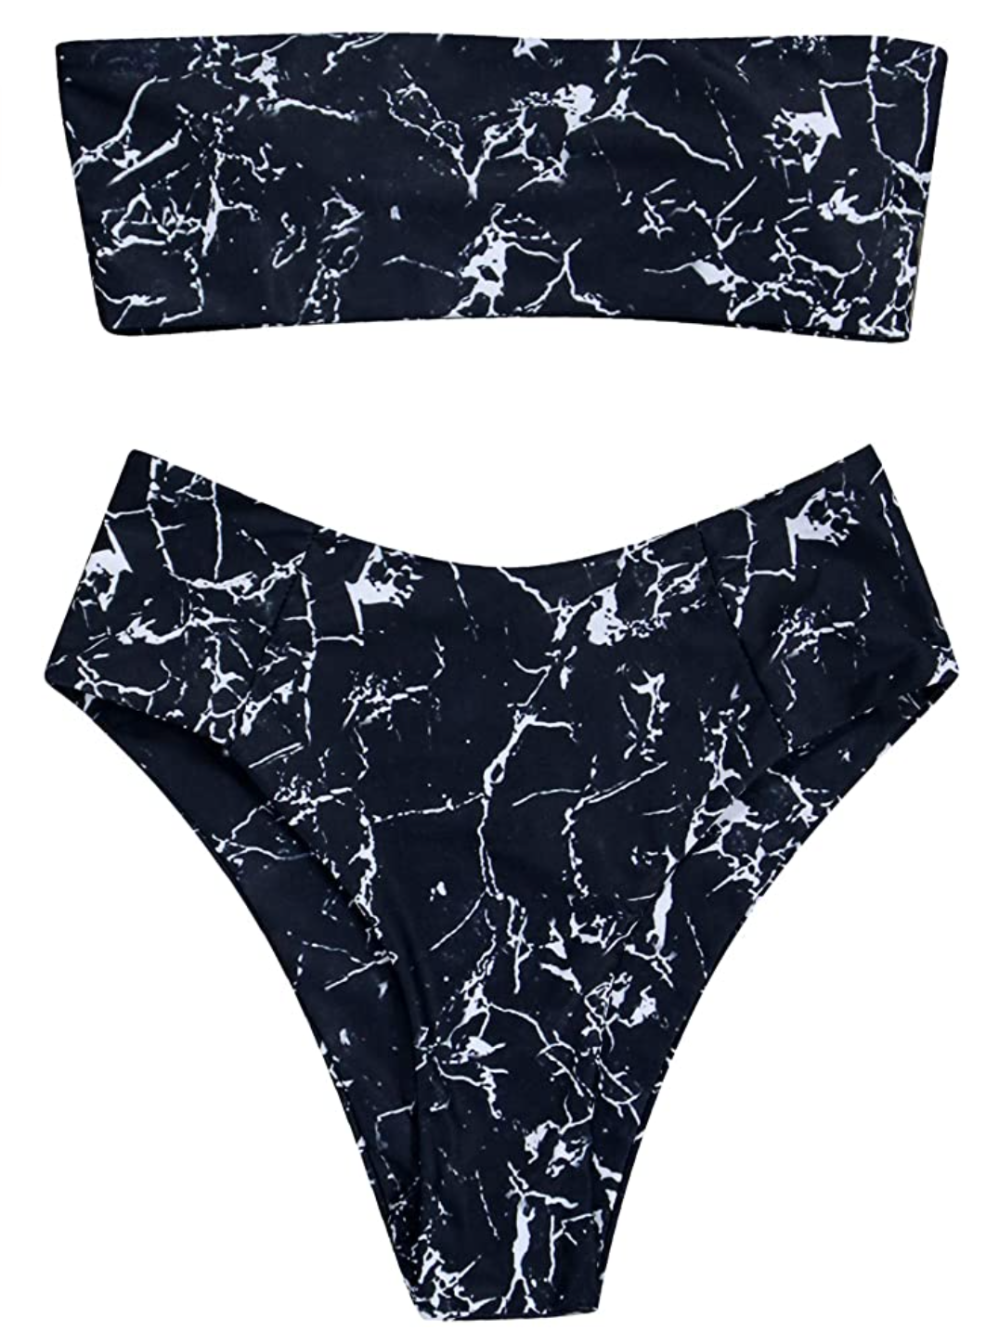 OMKAGI Women's 2 Pieces Bandeau Bikini High Waist Swimsuit